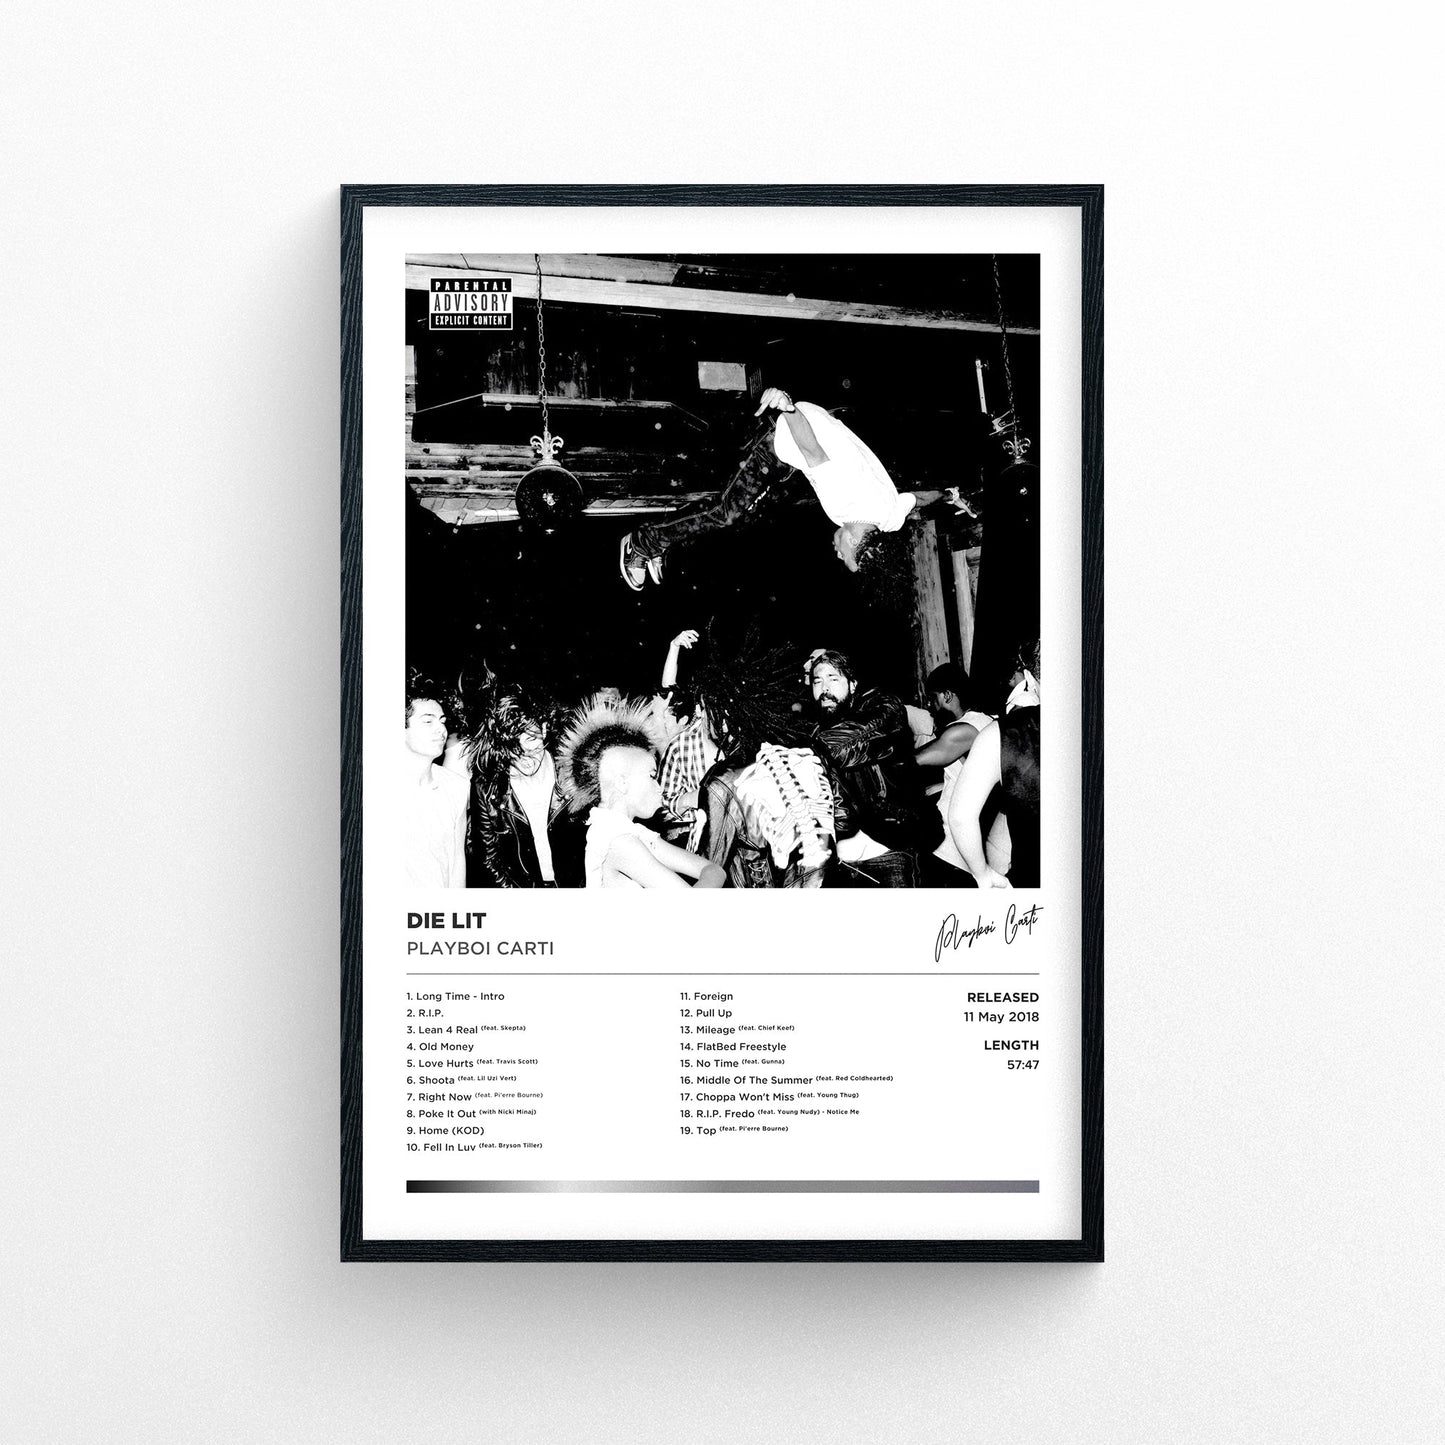 Playboi Carti - Die Lit Framed Poster Print | Polaroid Style | Album Cover Artwork